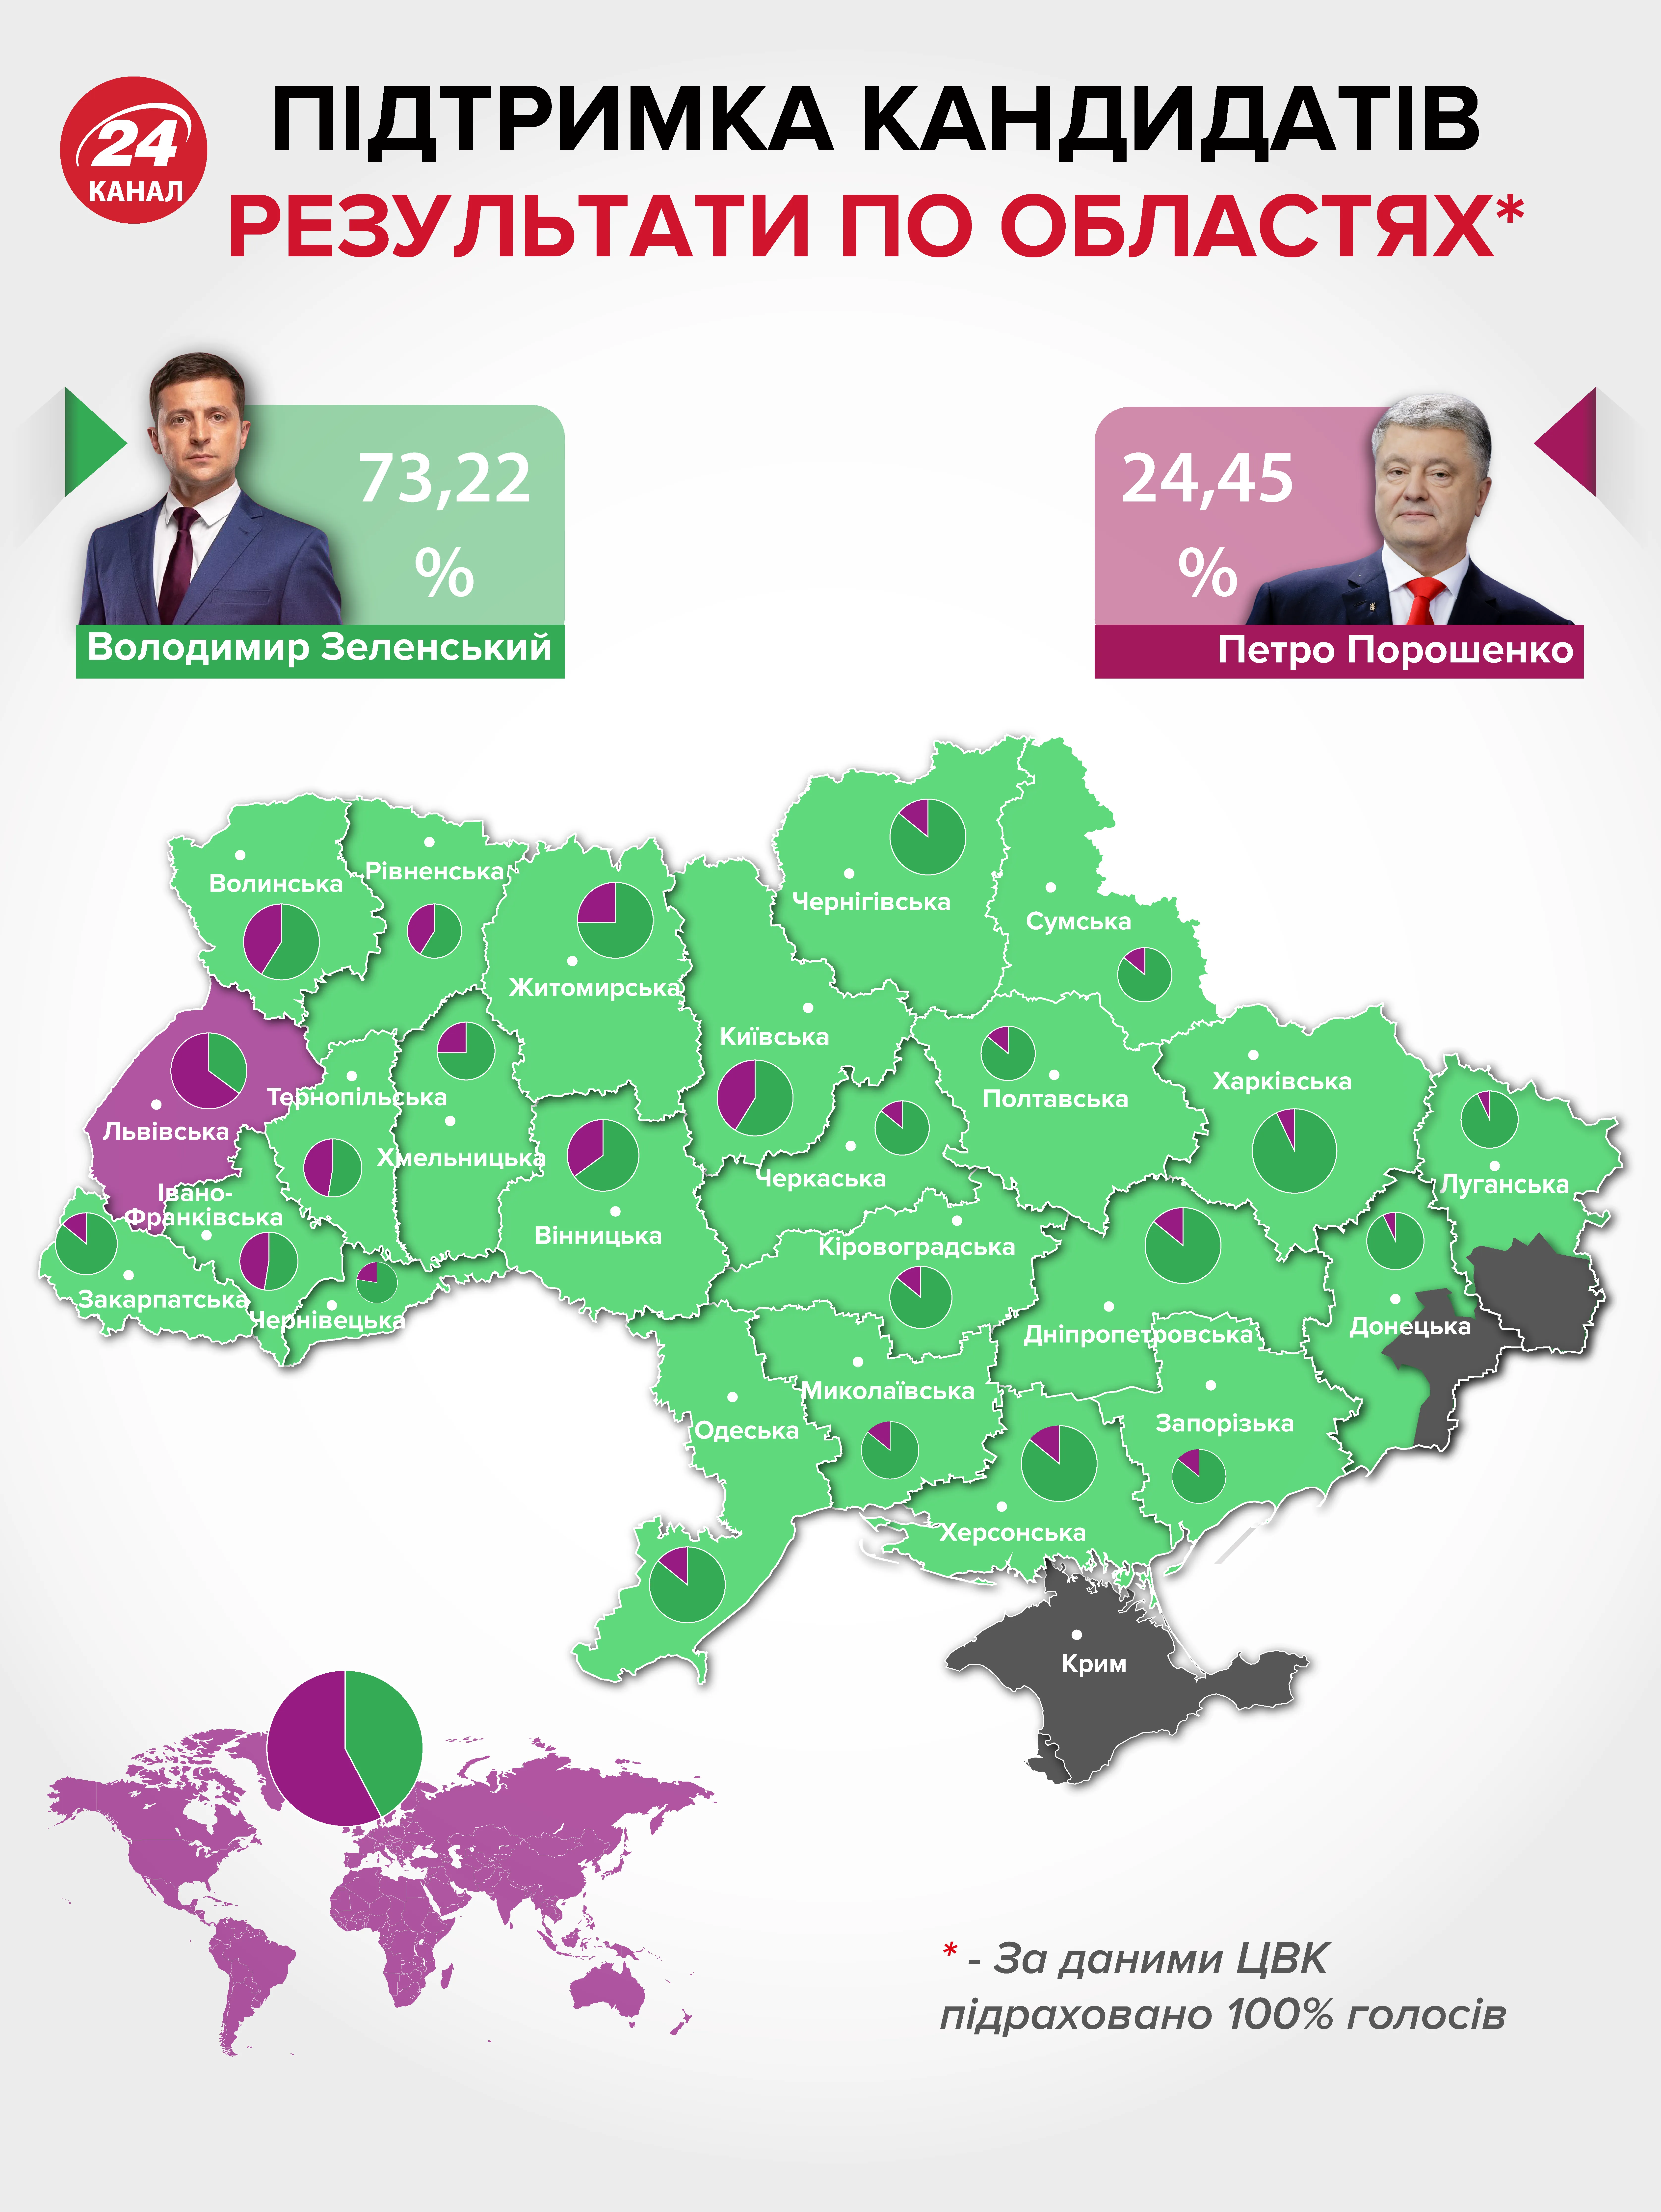 вибори президента України результати